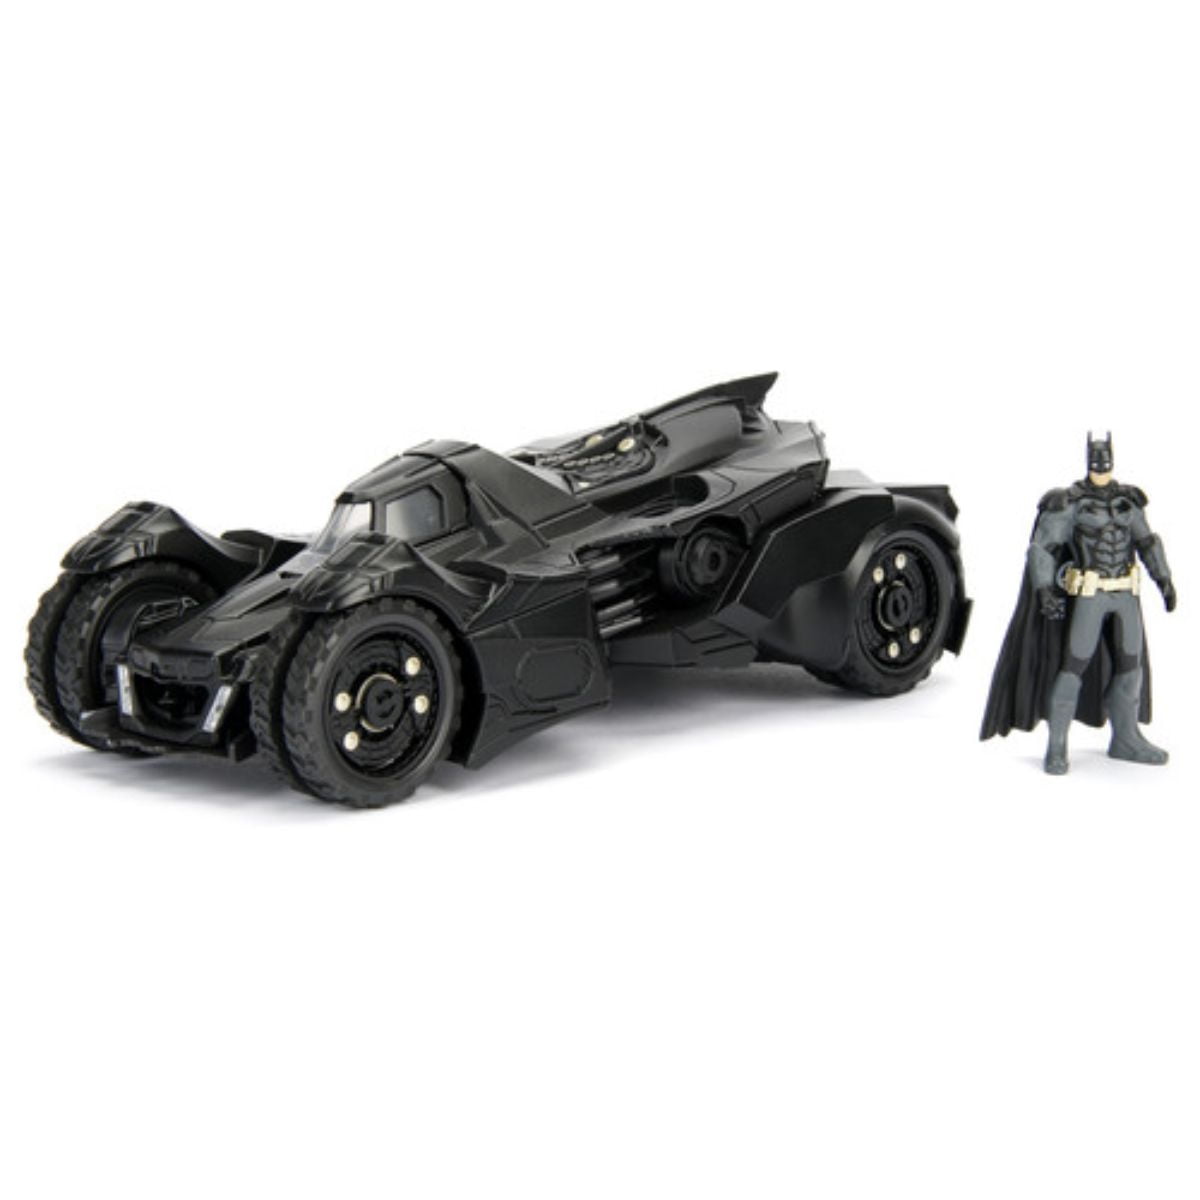 McFarlane Toys DC Multiverse Batman The Bat-raptor Vehicle for sale online